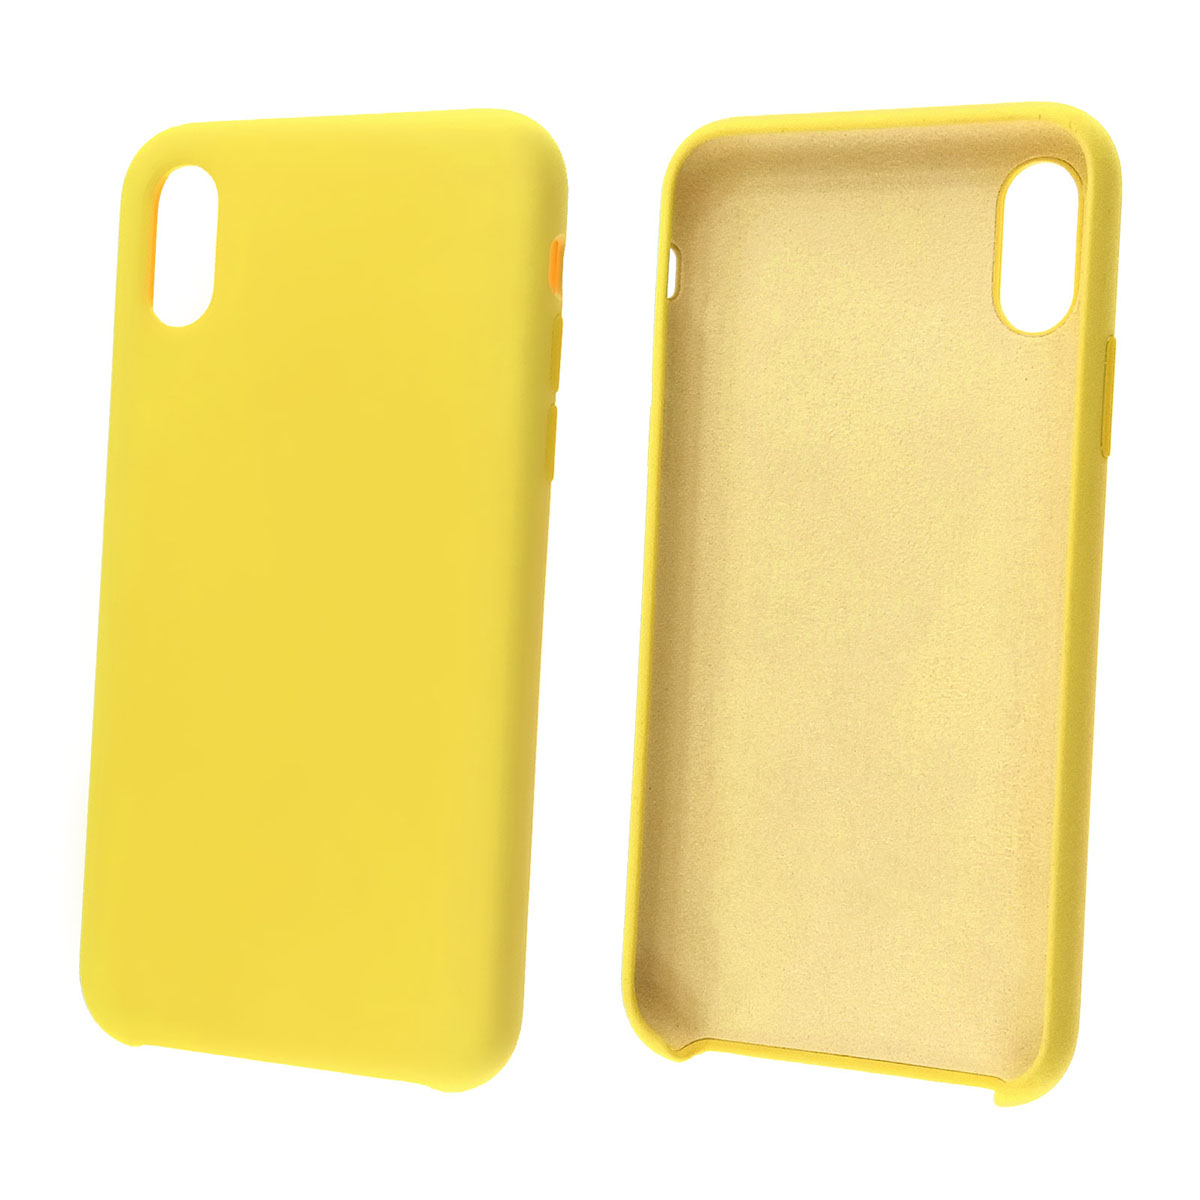 Чехол накладка Silicon Case для APPLE iPhone X, XS, силикон, бархат, цвет желтый.